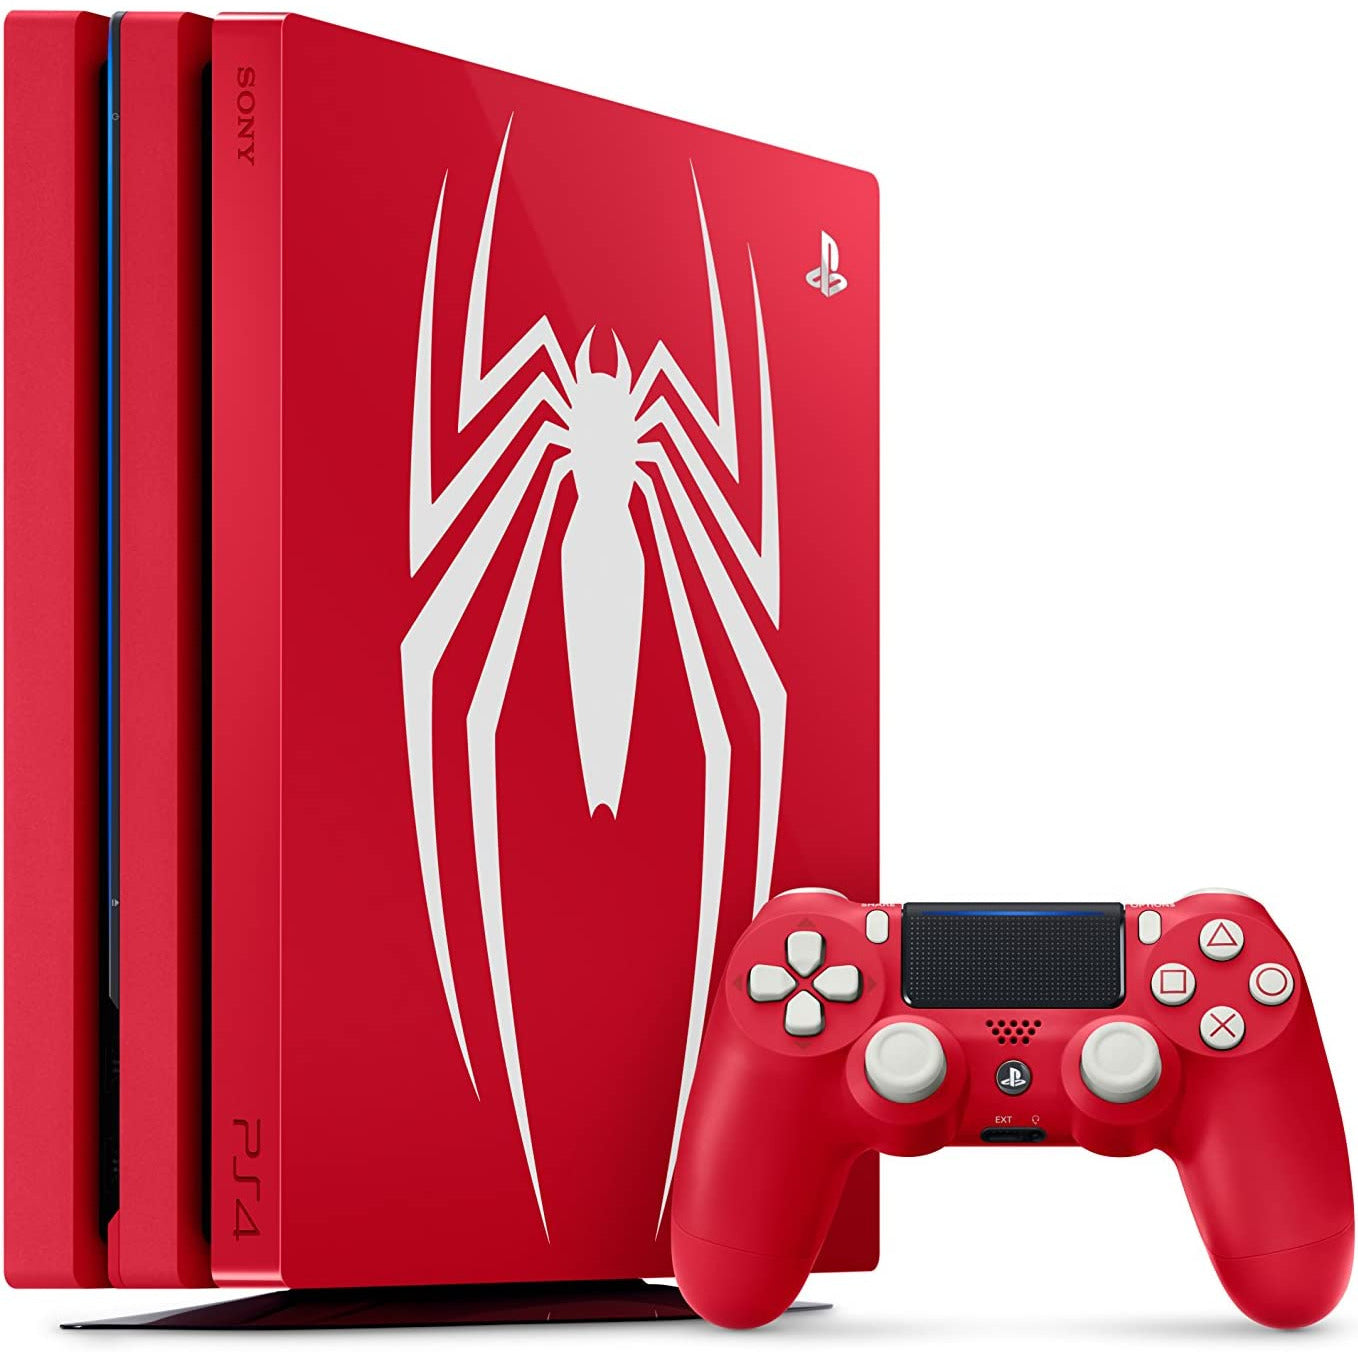 Playstation 4 Pro System 1TB - Spider-Man Edition